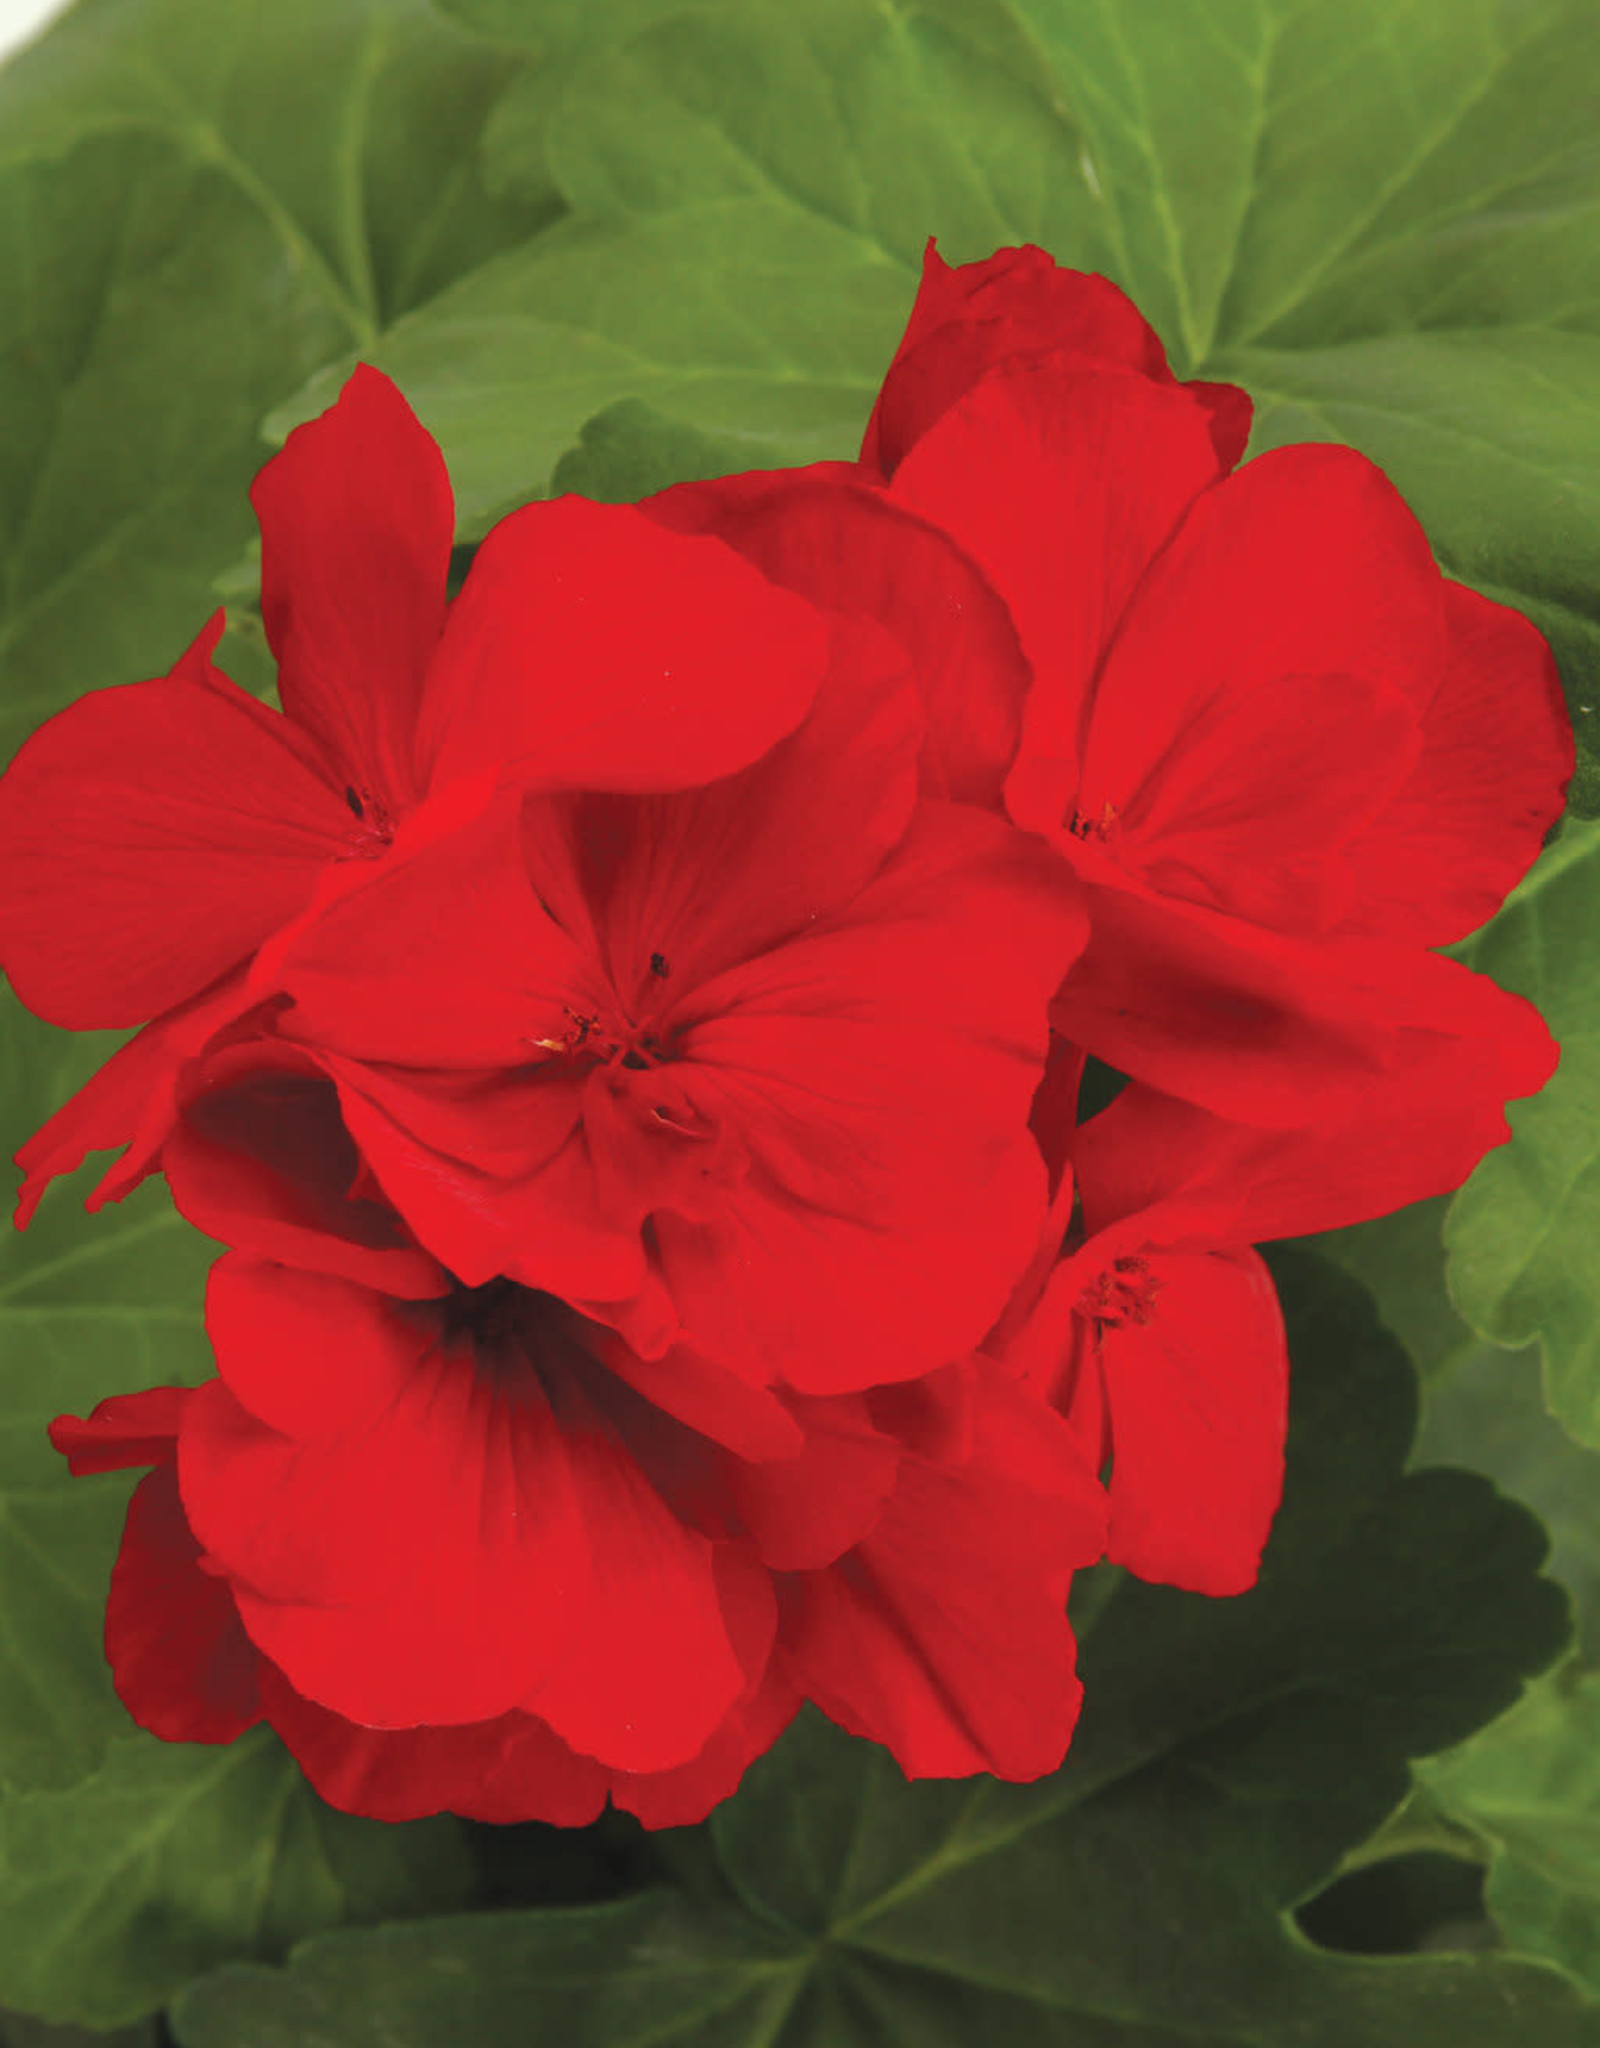 Proven Winners Pelargonium Boldly Dark Red PW 5.5 in